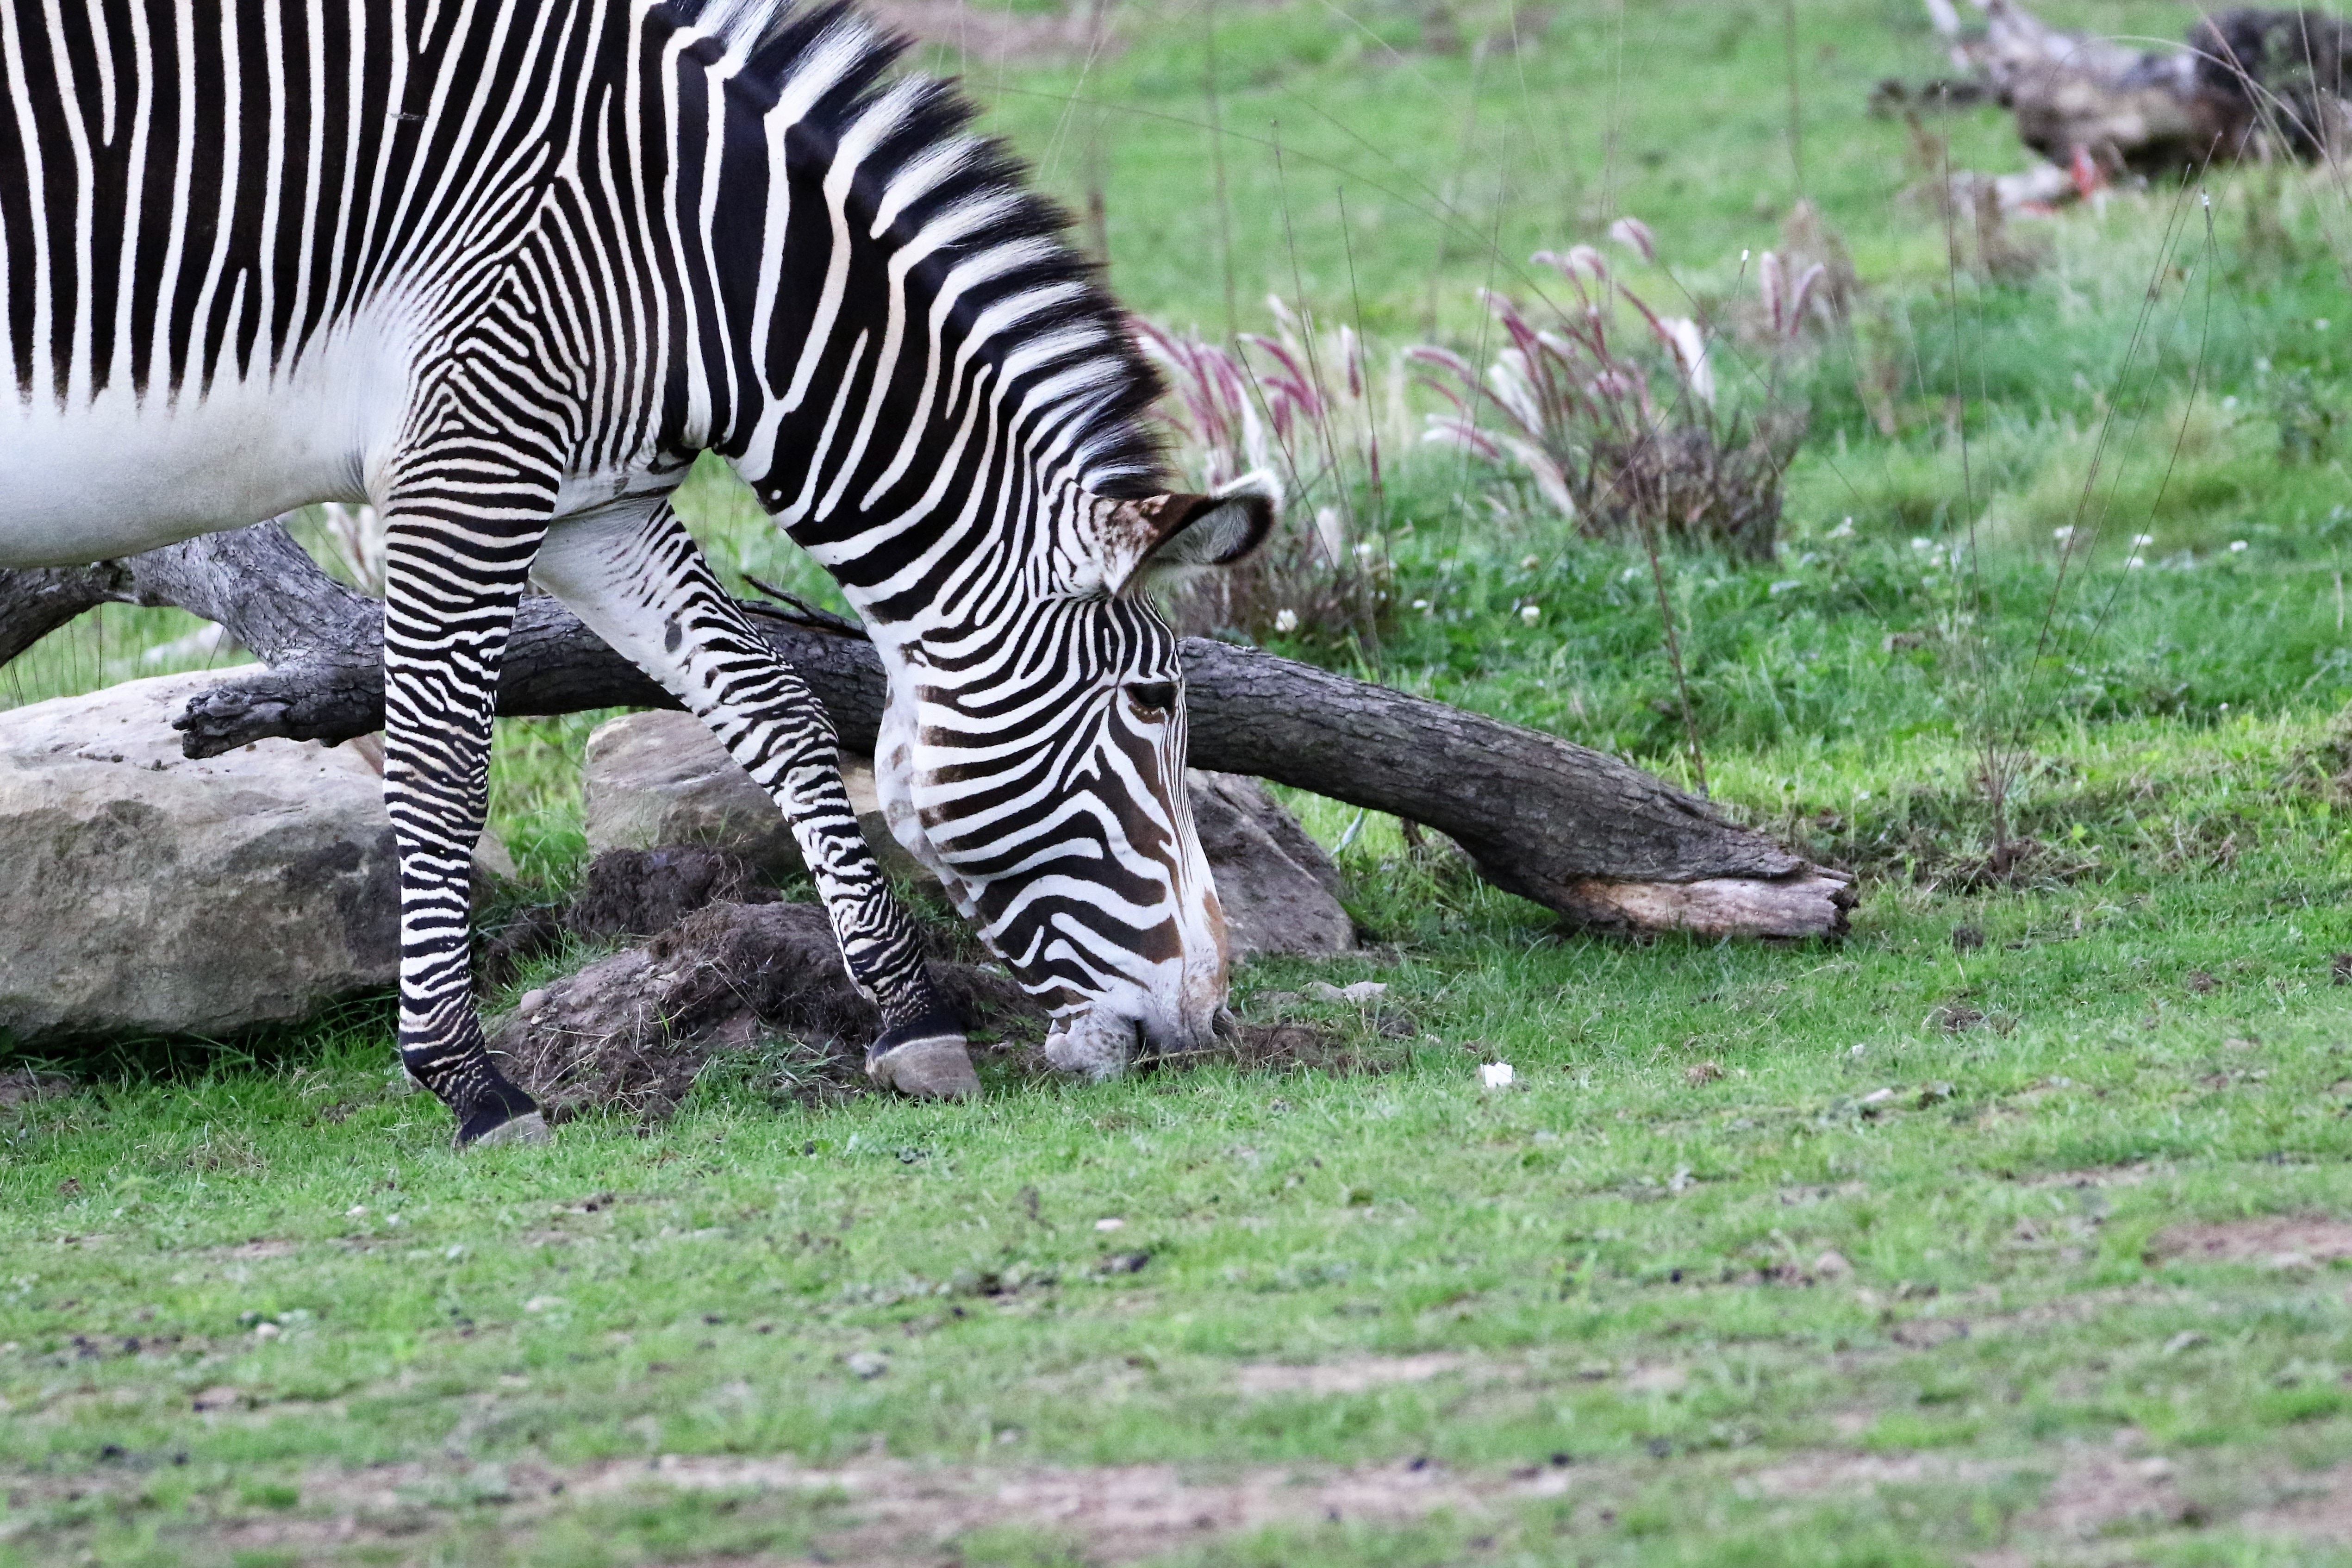 White, Zebra, Black, Stripes, Striped, grass, striped